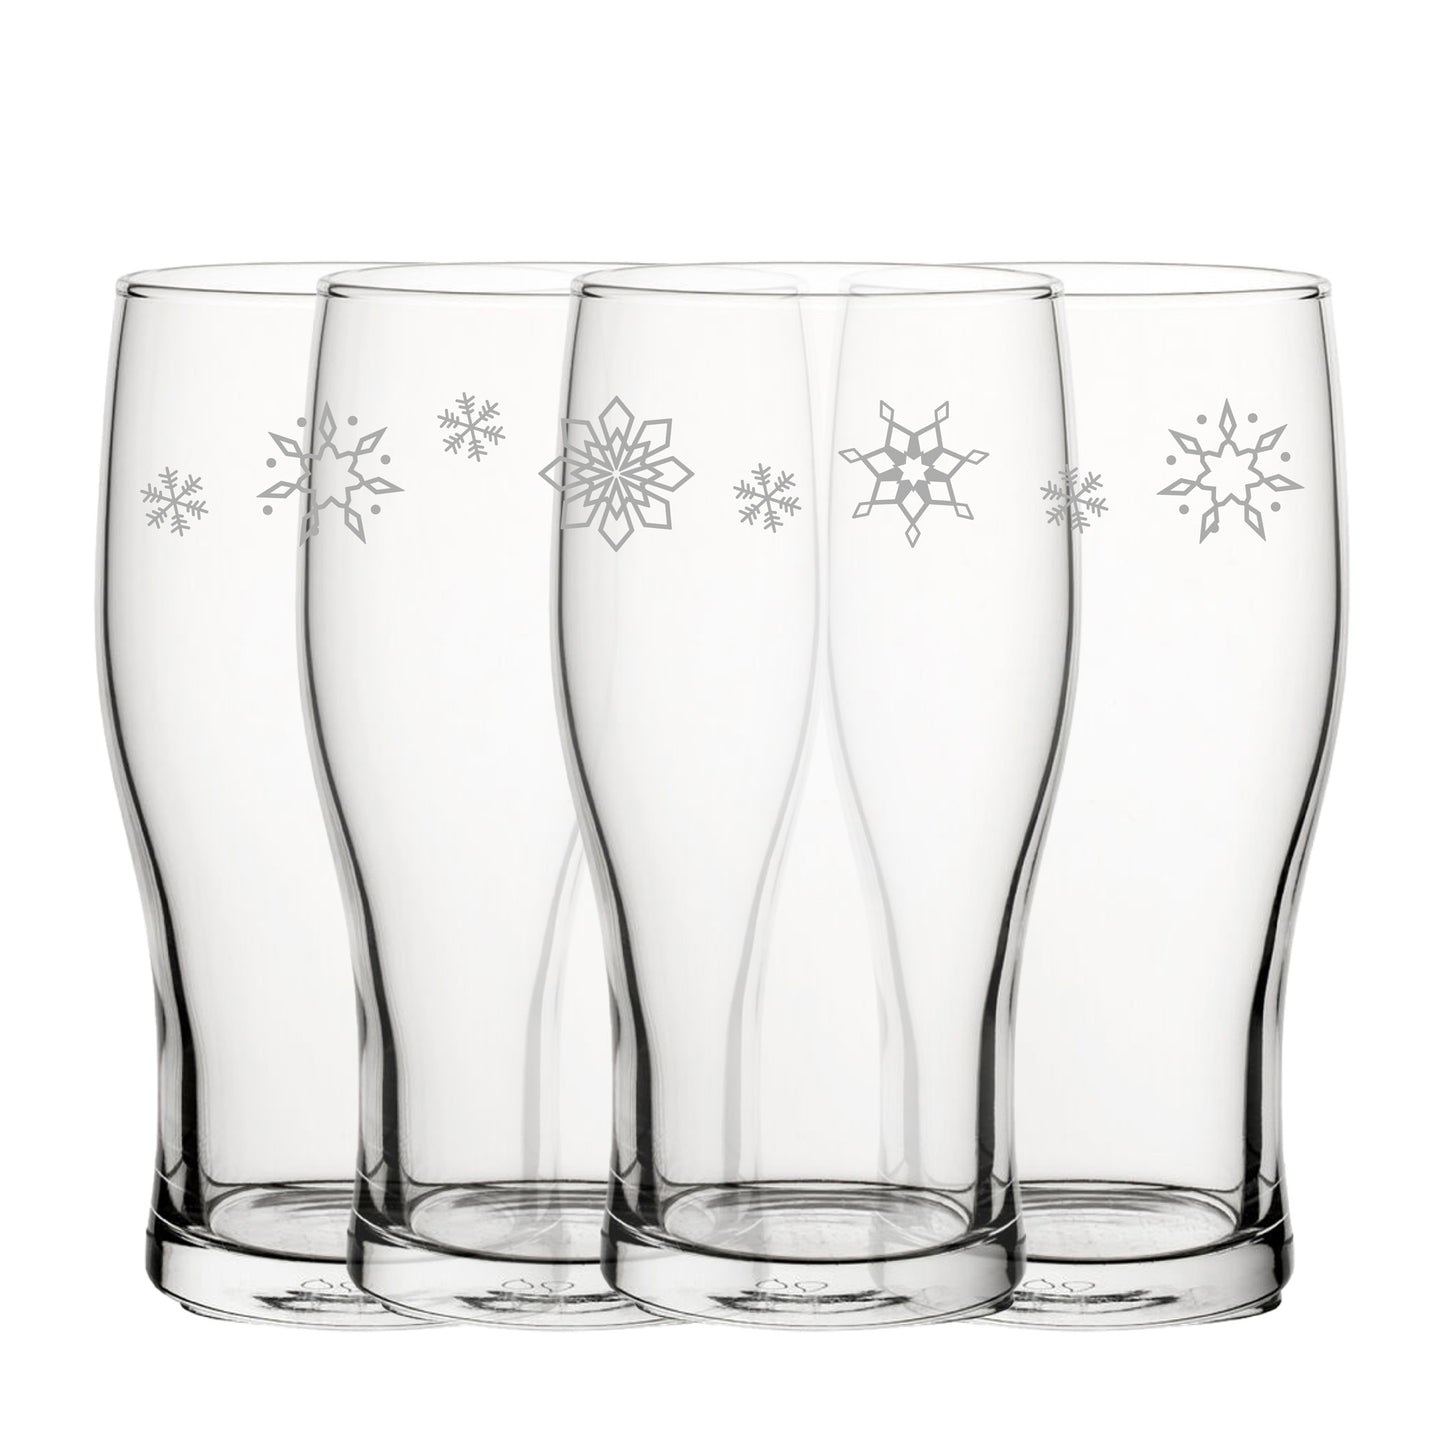 Engraved Snowflake Pattern Tulip Pint Glass Set of 4 20oz Glasses Image 2